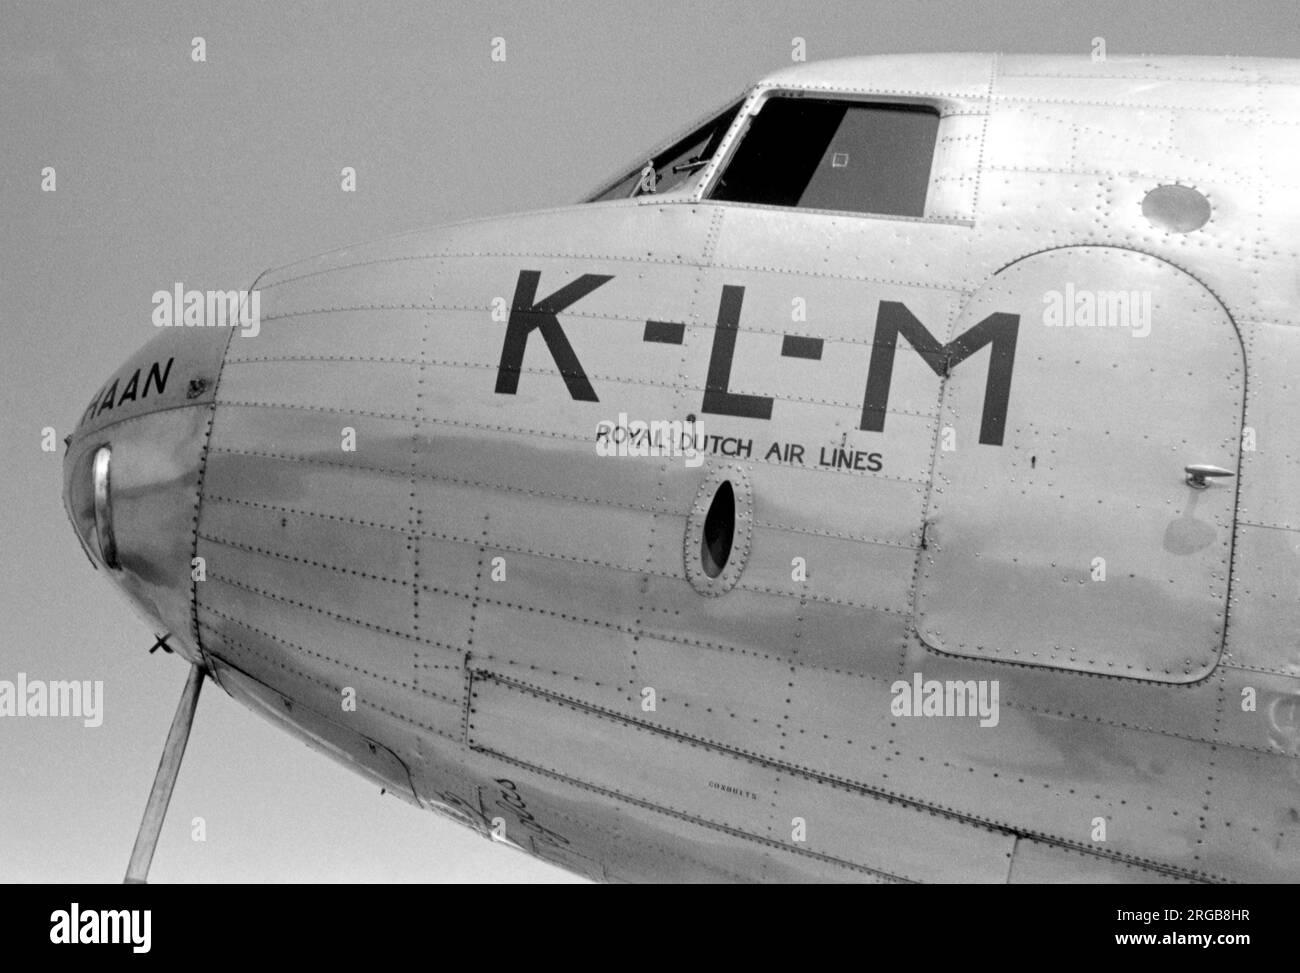 Douglas DC-2-115E PH-AKH 'Haan' (msn 1354.14), of KLM (Koninklijke Luchtvaart Maatschappij N.V. - Royal Aviation Company, Inc.) at Croydon Airport. A study of the nose. Stock Photo